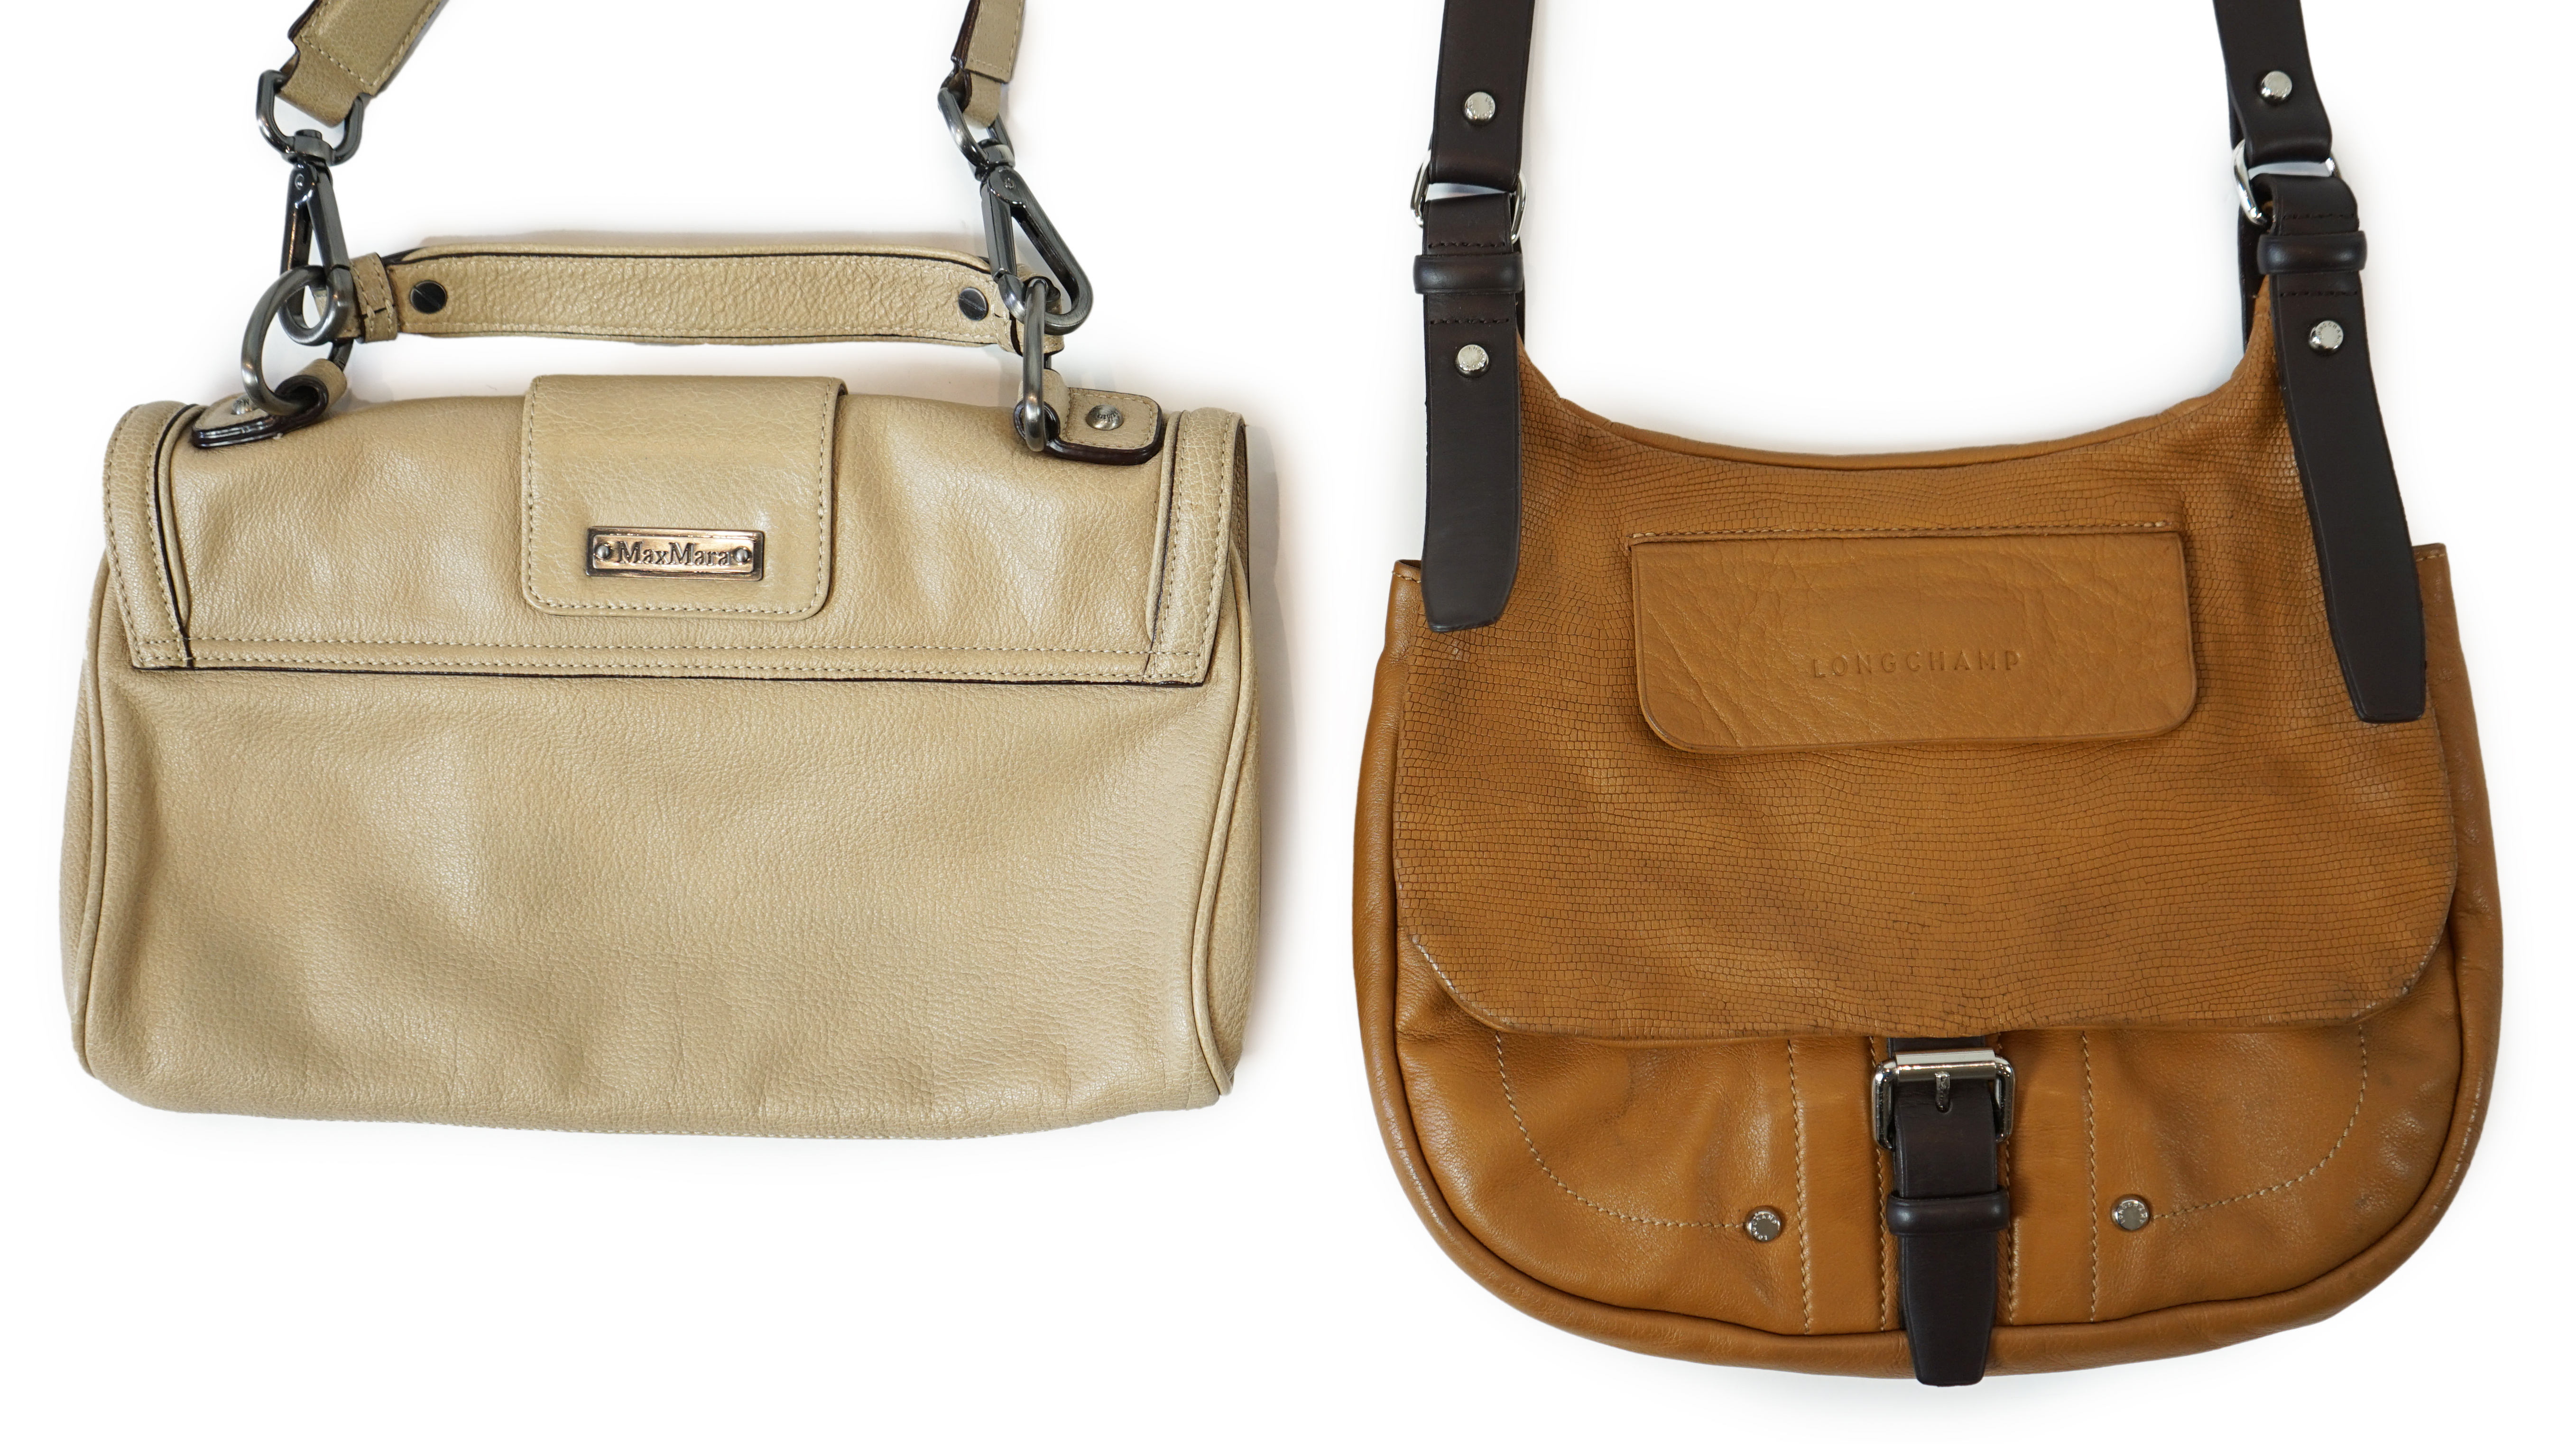 A Max Mara handbag and a Longchamp satchel style bag.